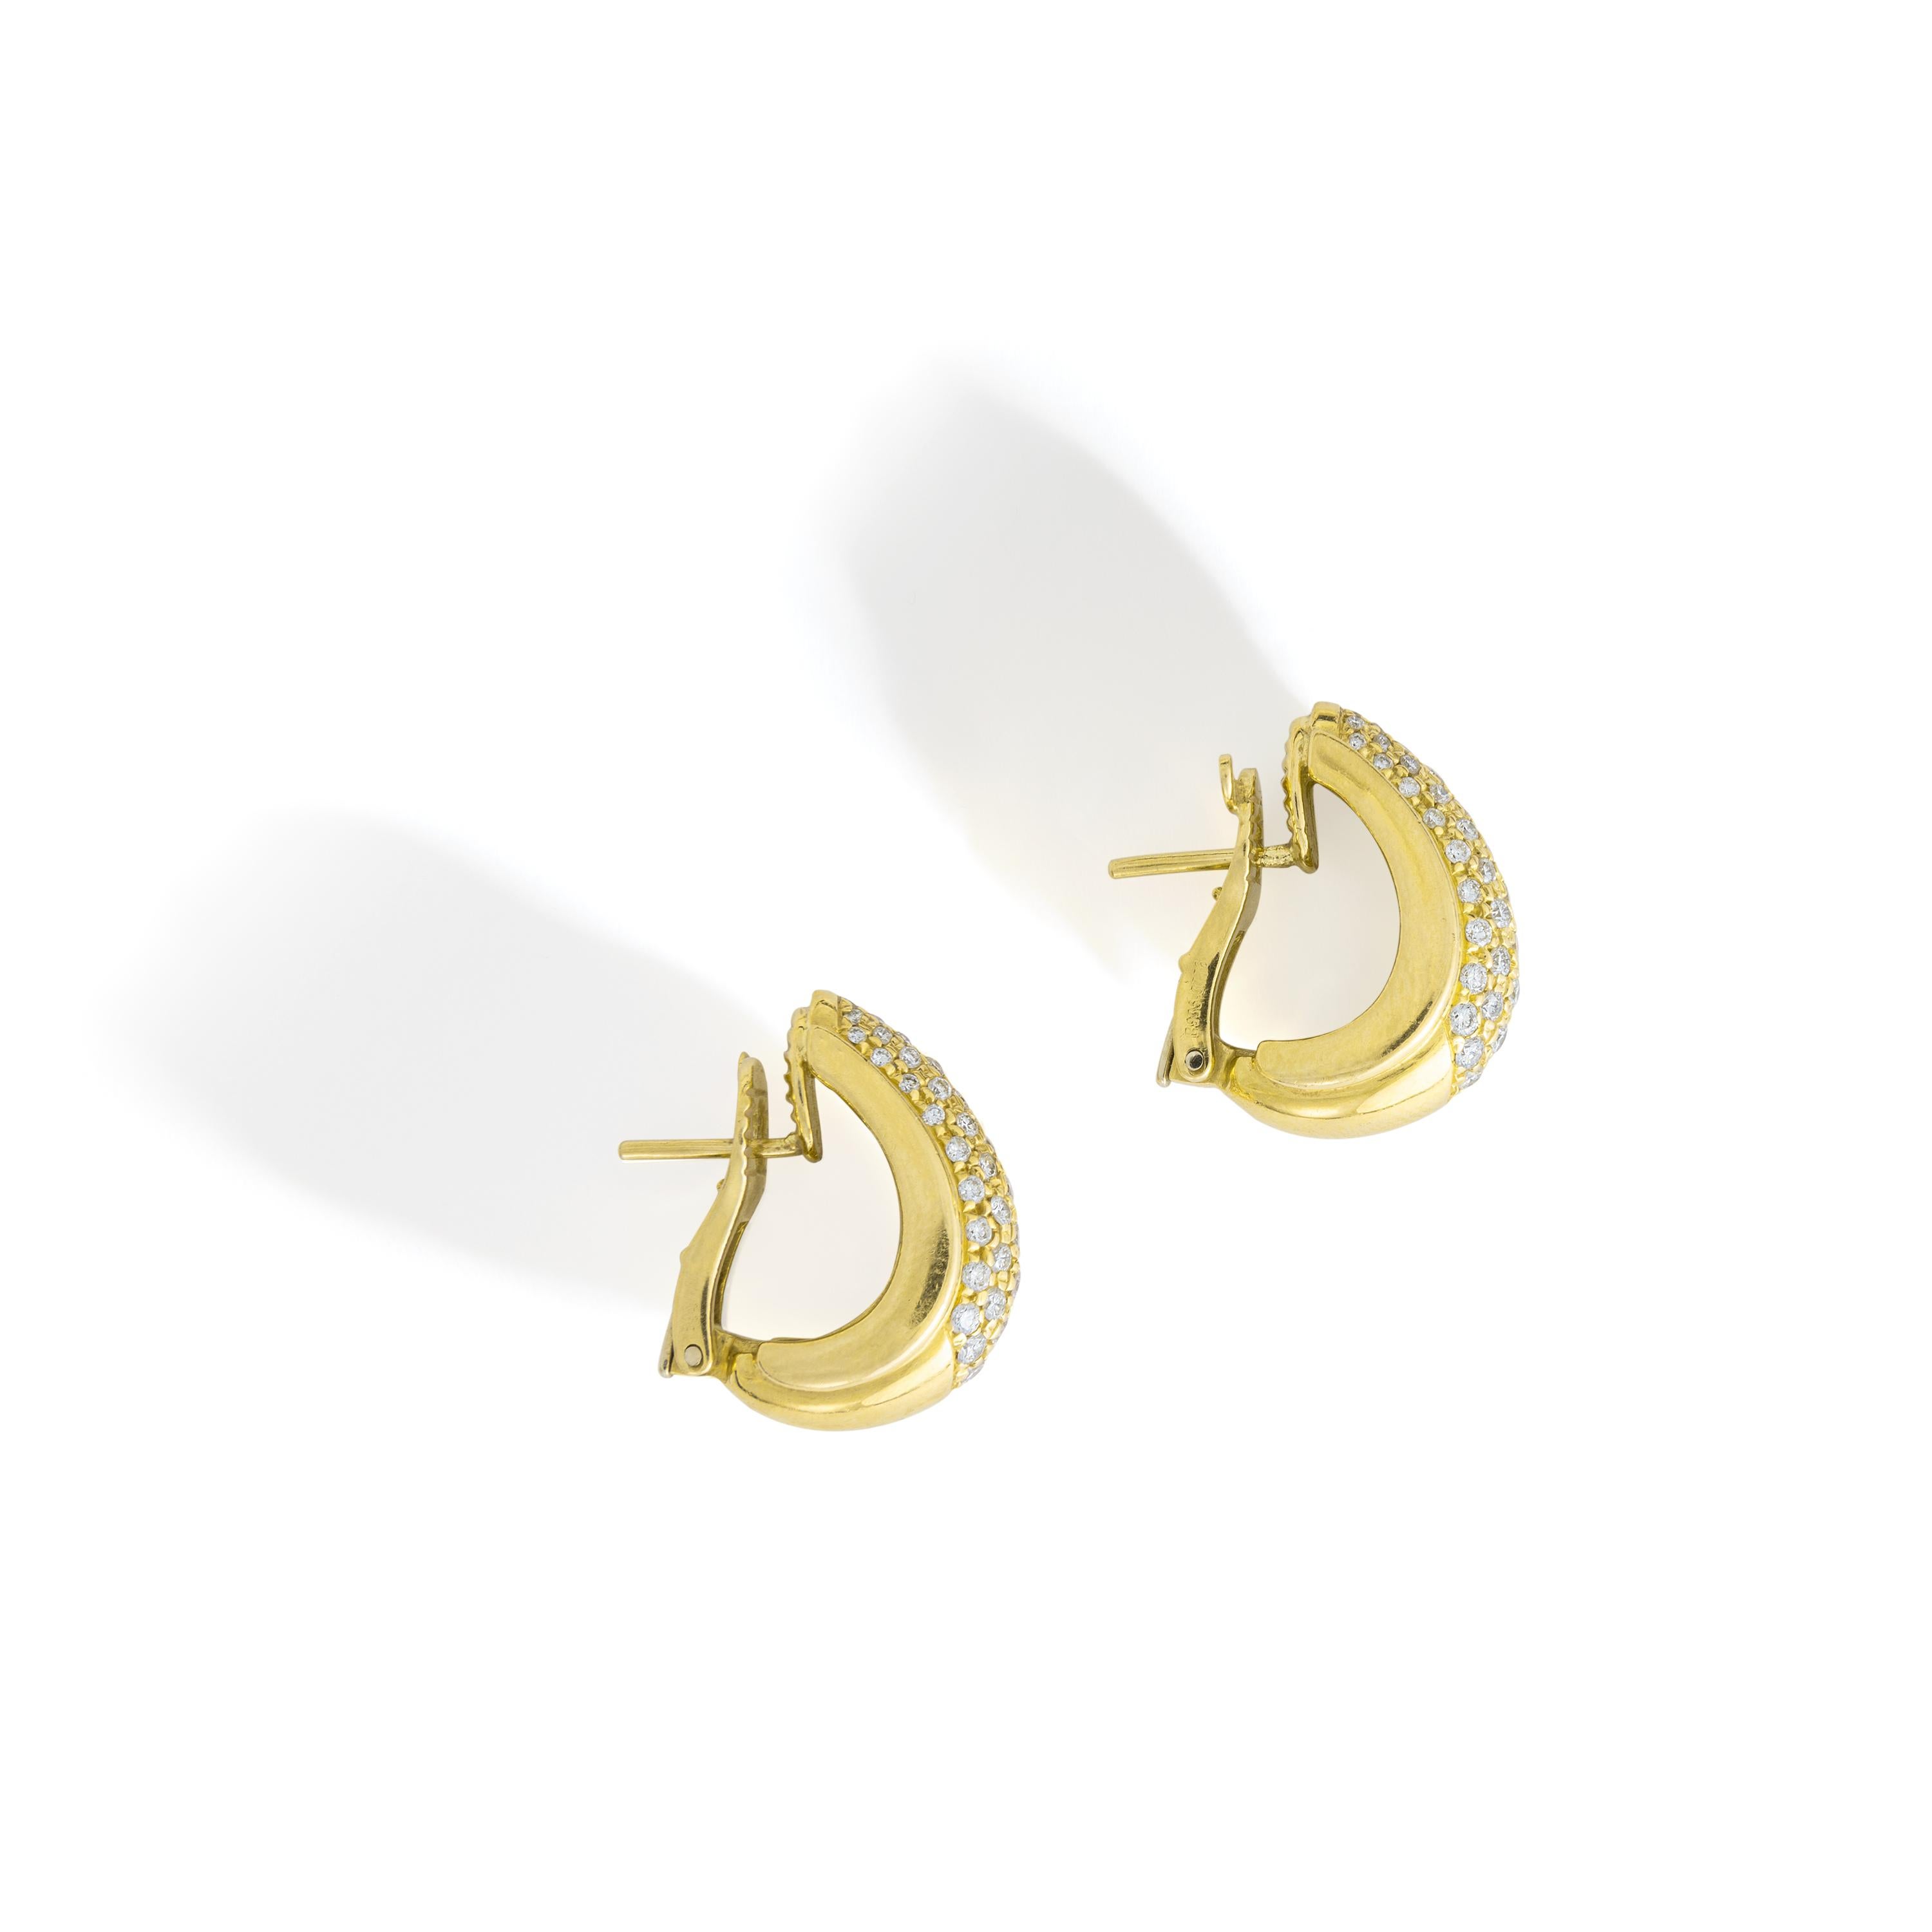 Round Cut Diamond Yellow Gold 18 Karat Earrings Earclips For Sale